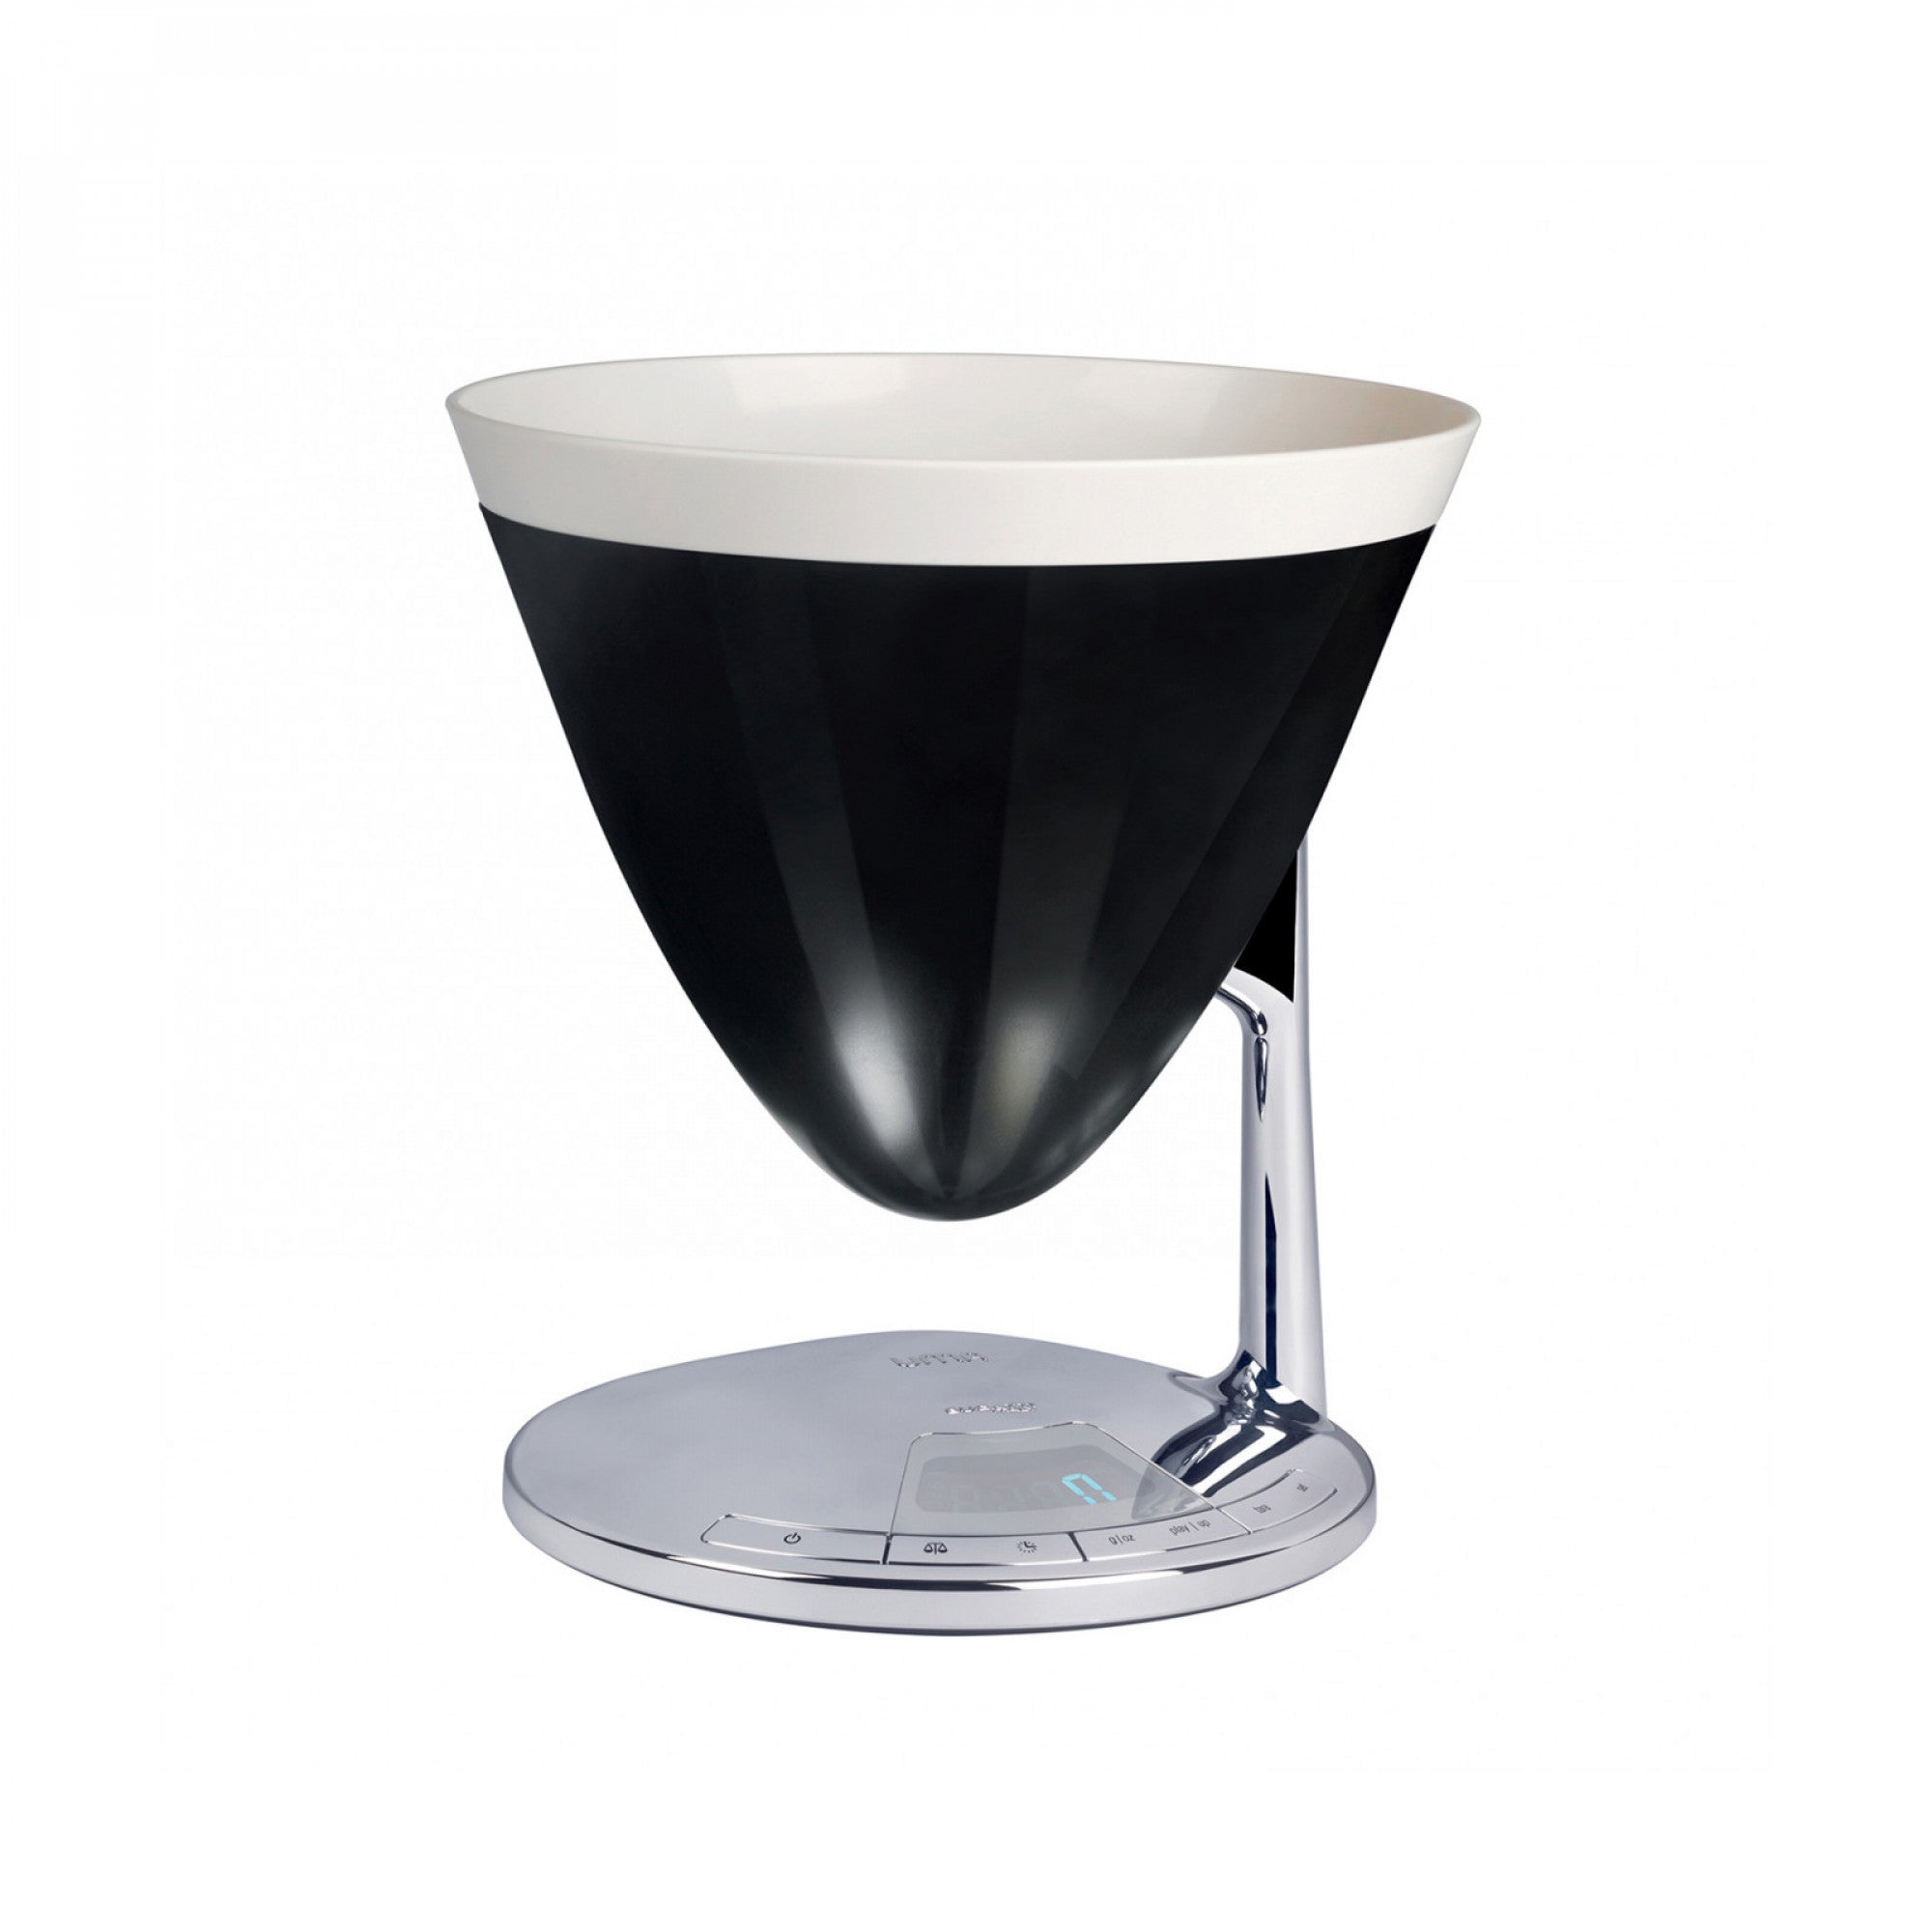 BUGATTI, Uma, Digital Kitchen Scale with Timer, Electronic Display, Removable Food Weighing Bowl, Maximum Capacity 3kg, Elegant Design